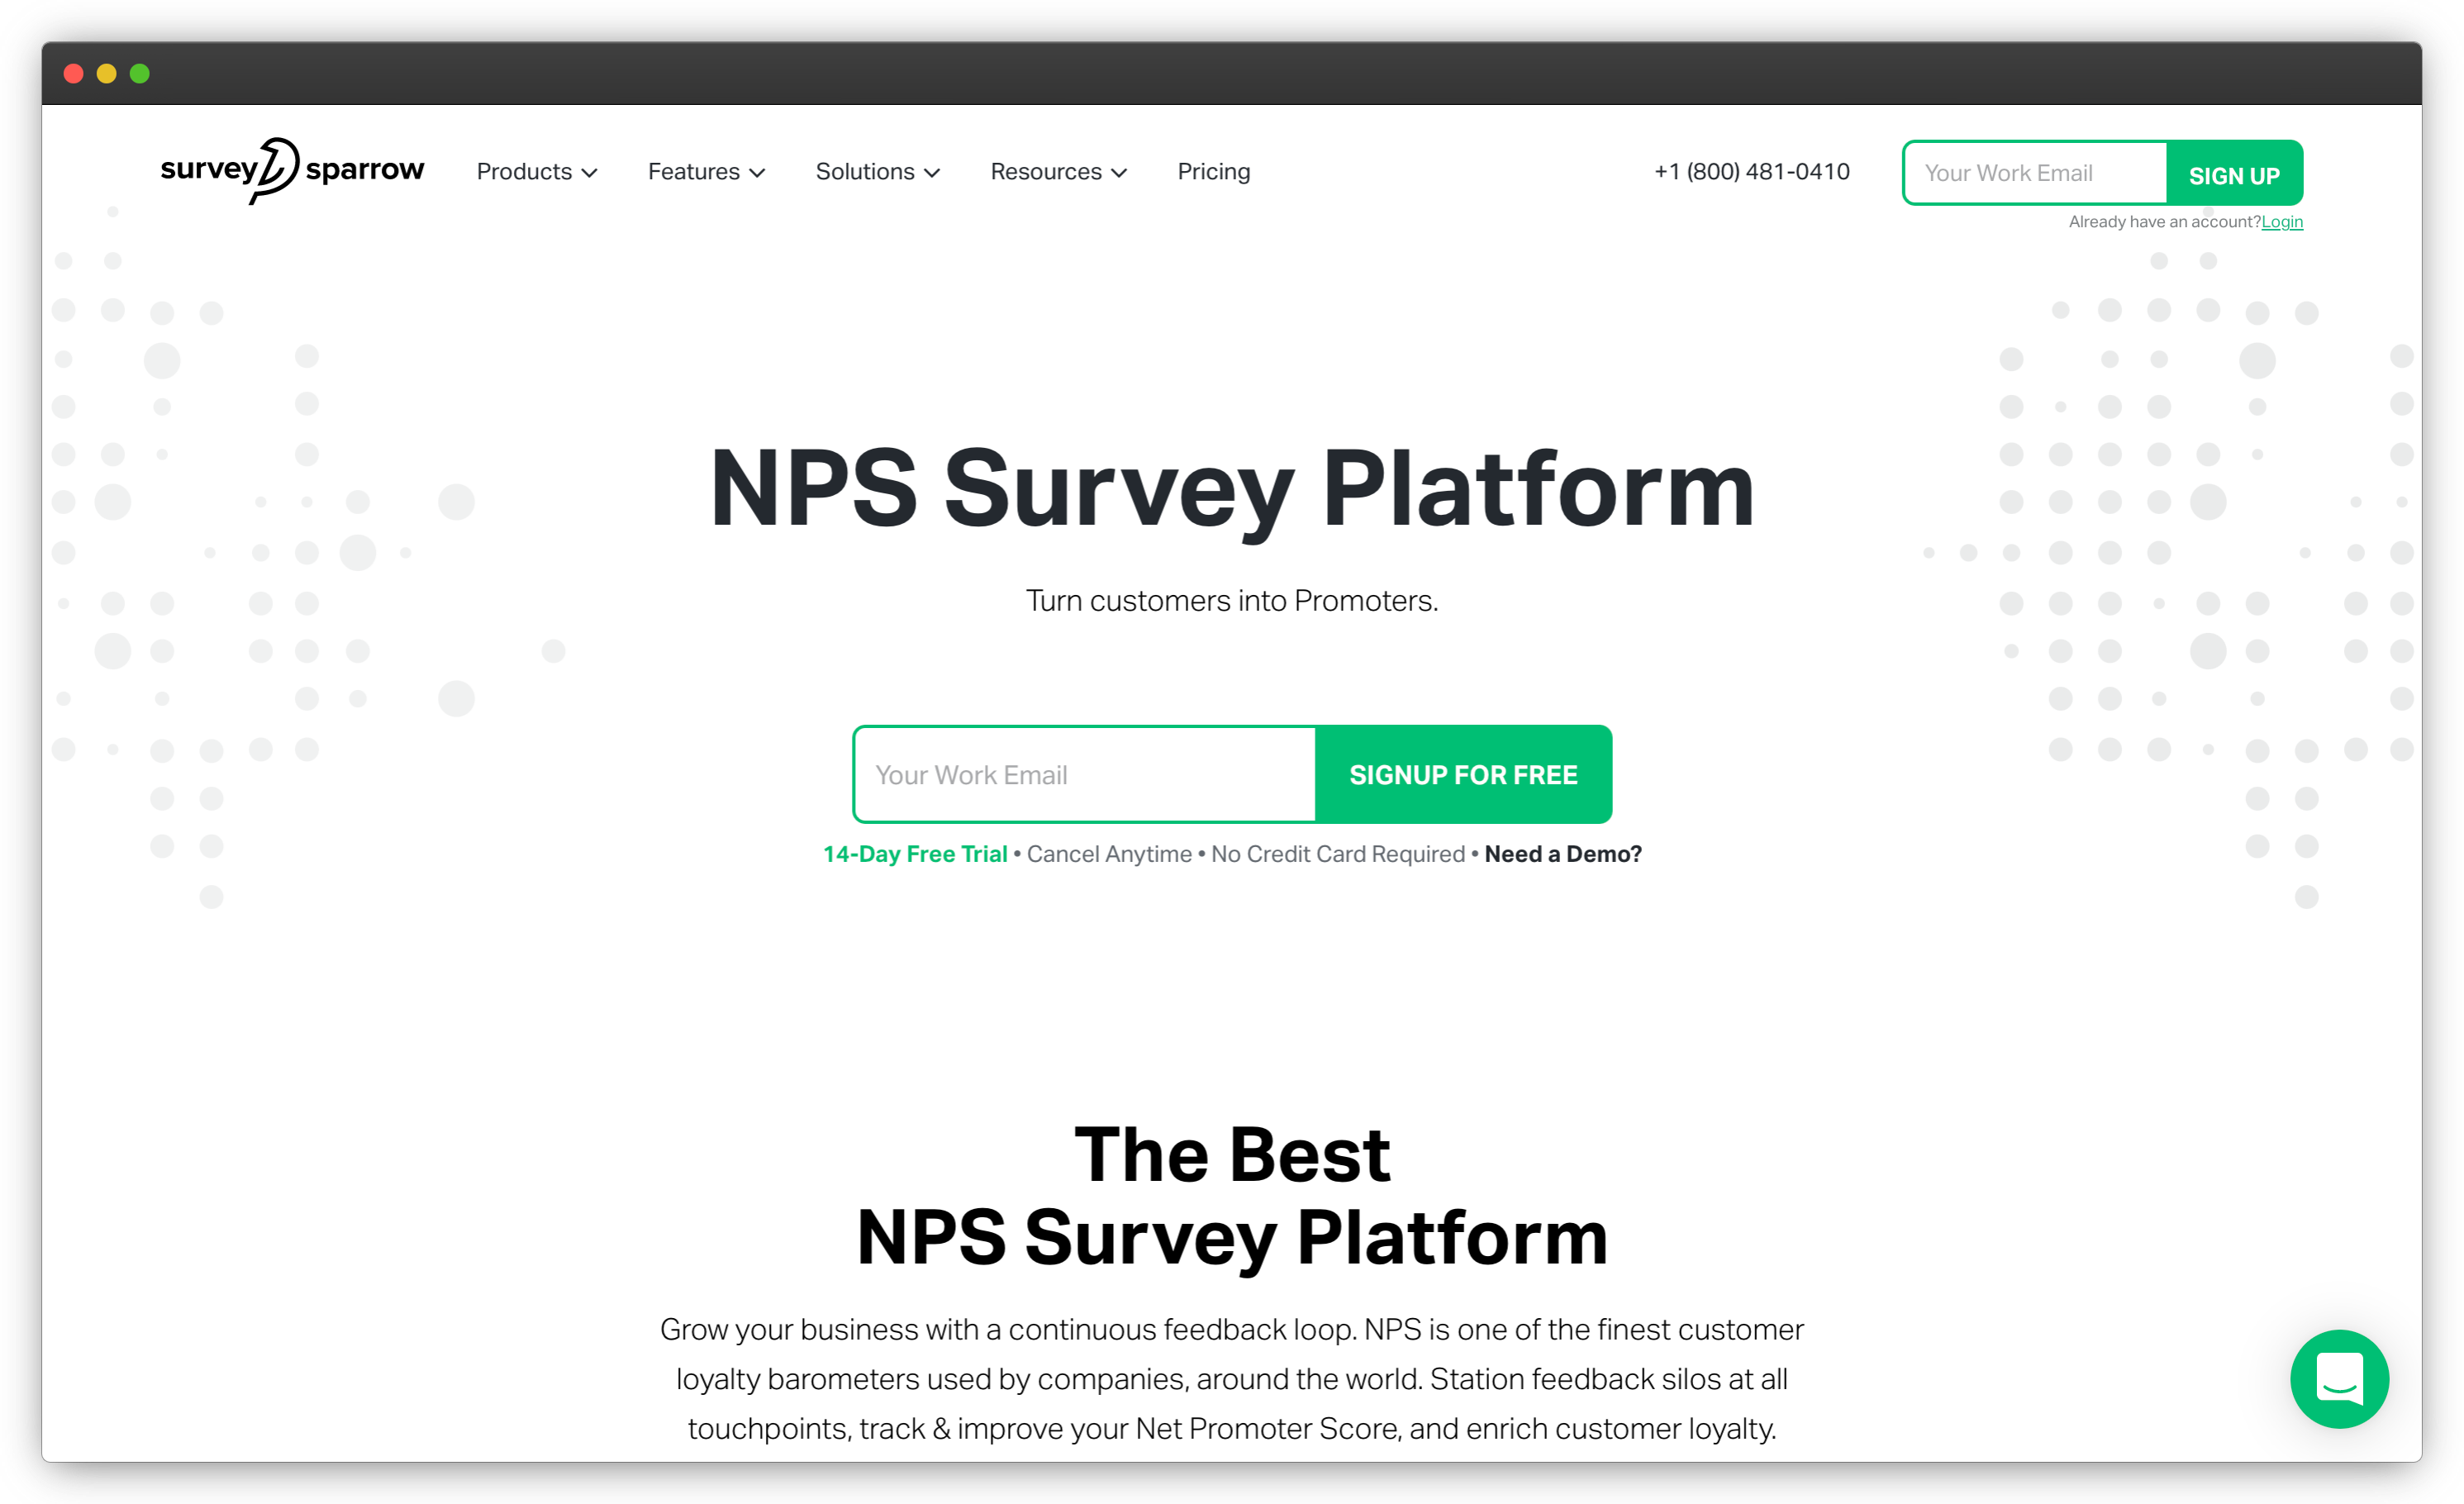 Survey Sparrow - NPS Software